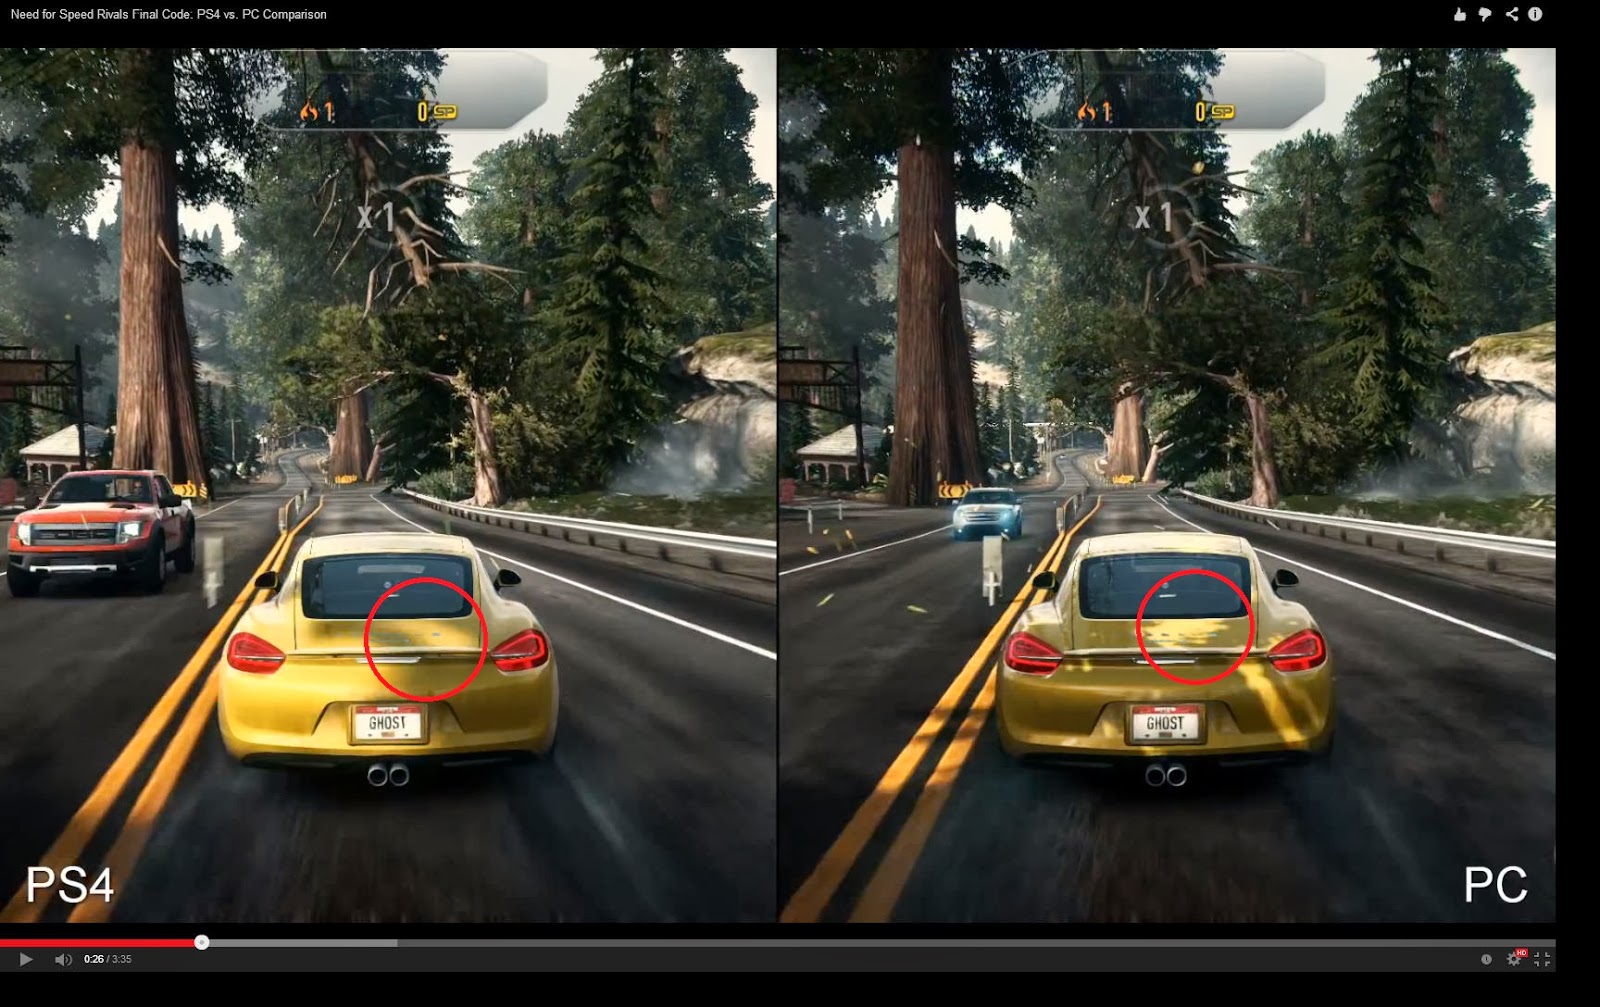 Ps5 играть вдвоем на одном экране. Нфс ривалс хбокс 360. Need for Speed Rivals Xbox 360. Need for Speed Rivals PLAYSTATION 4. Нфс на пс3.